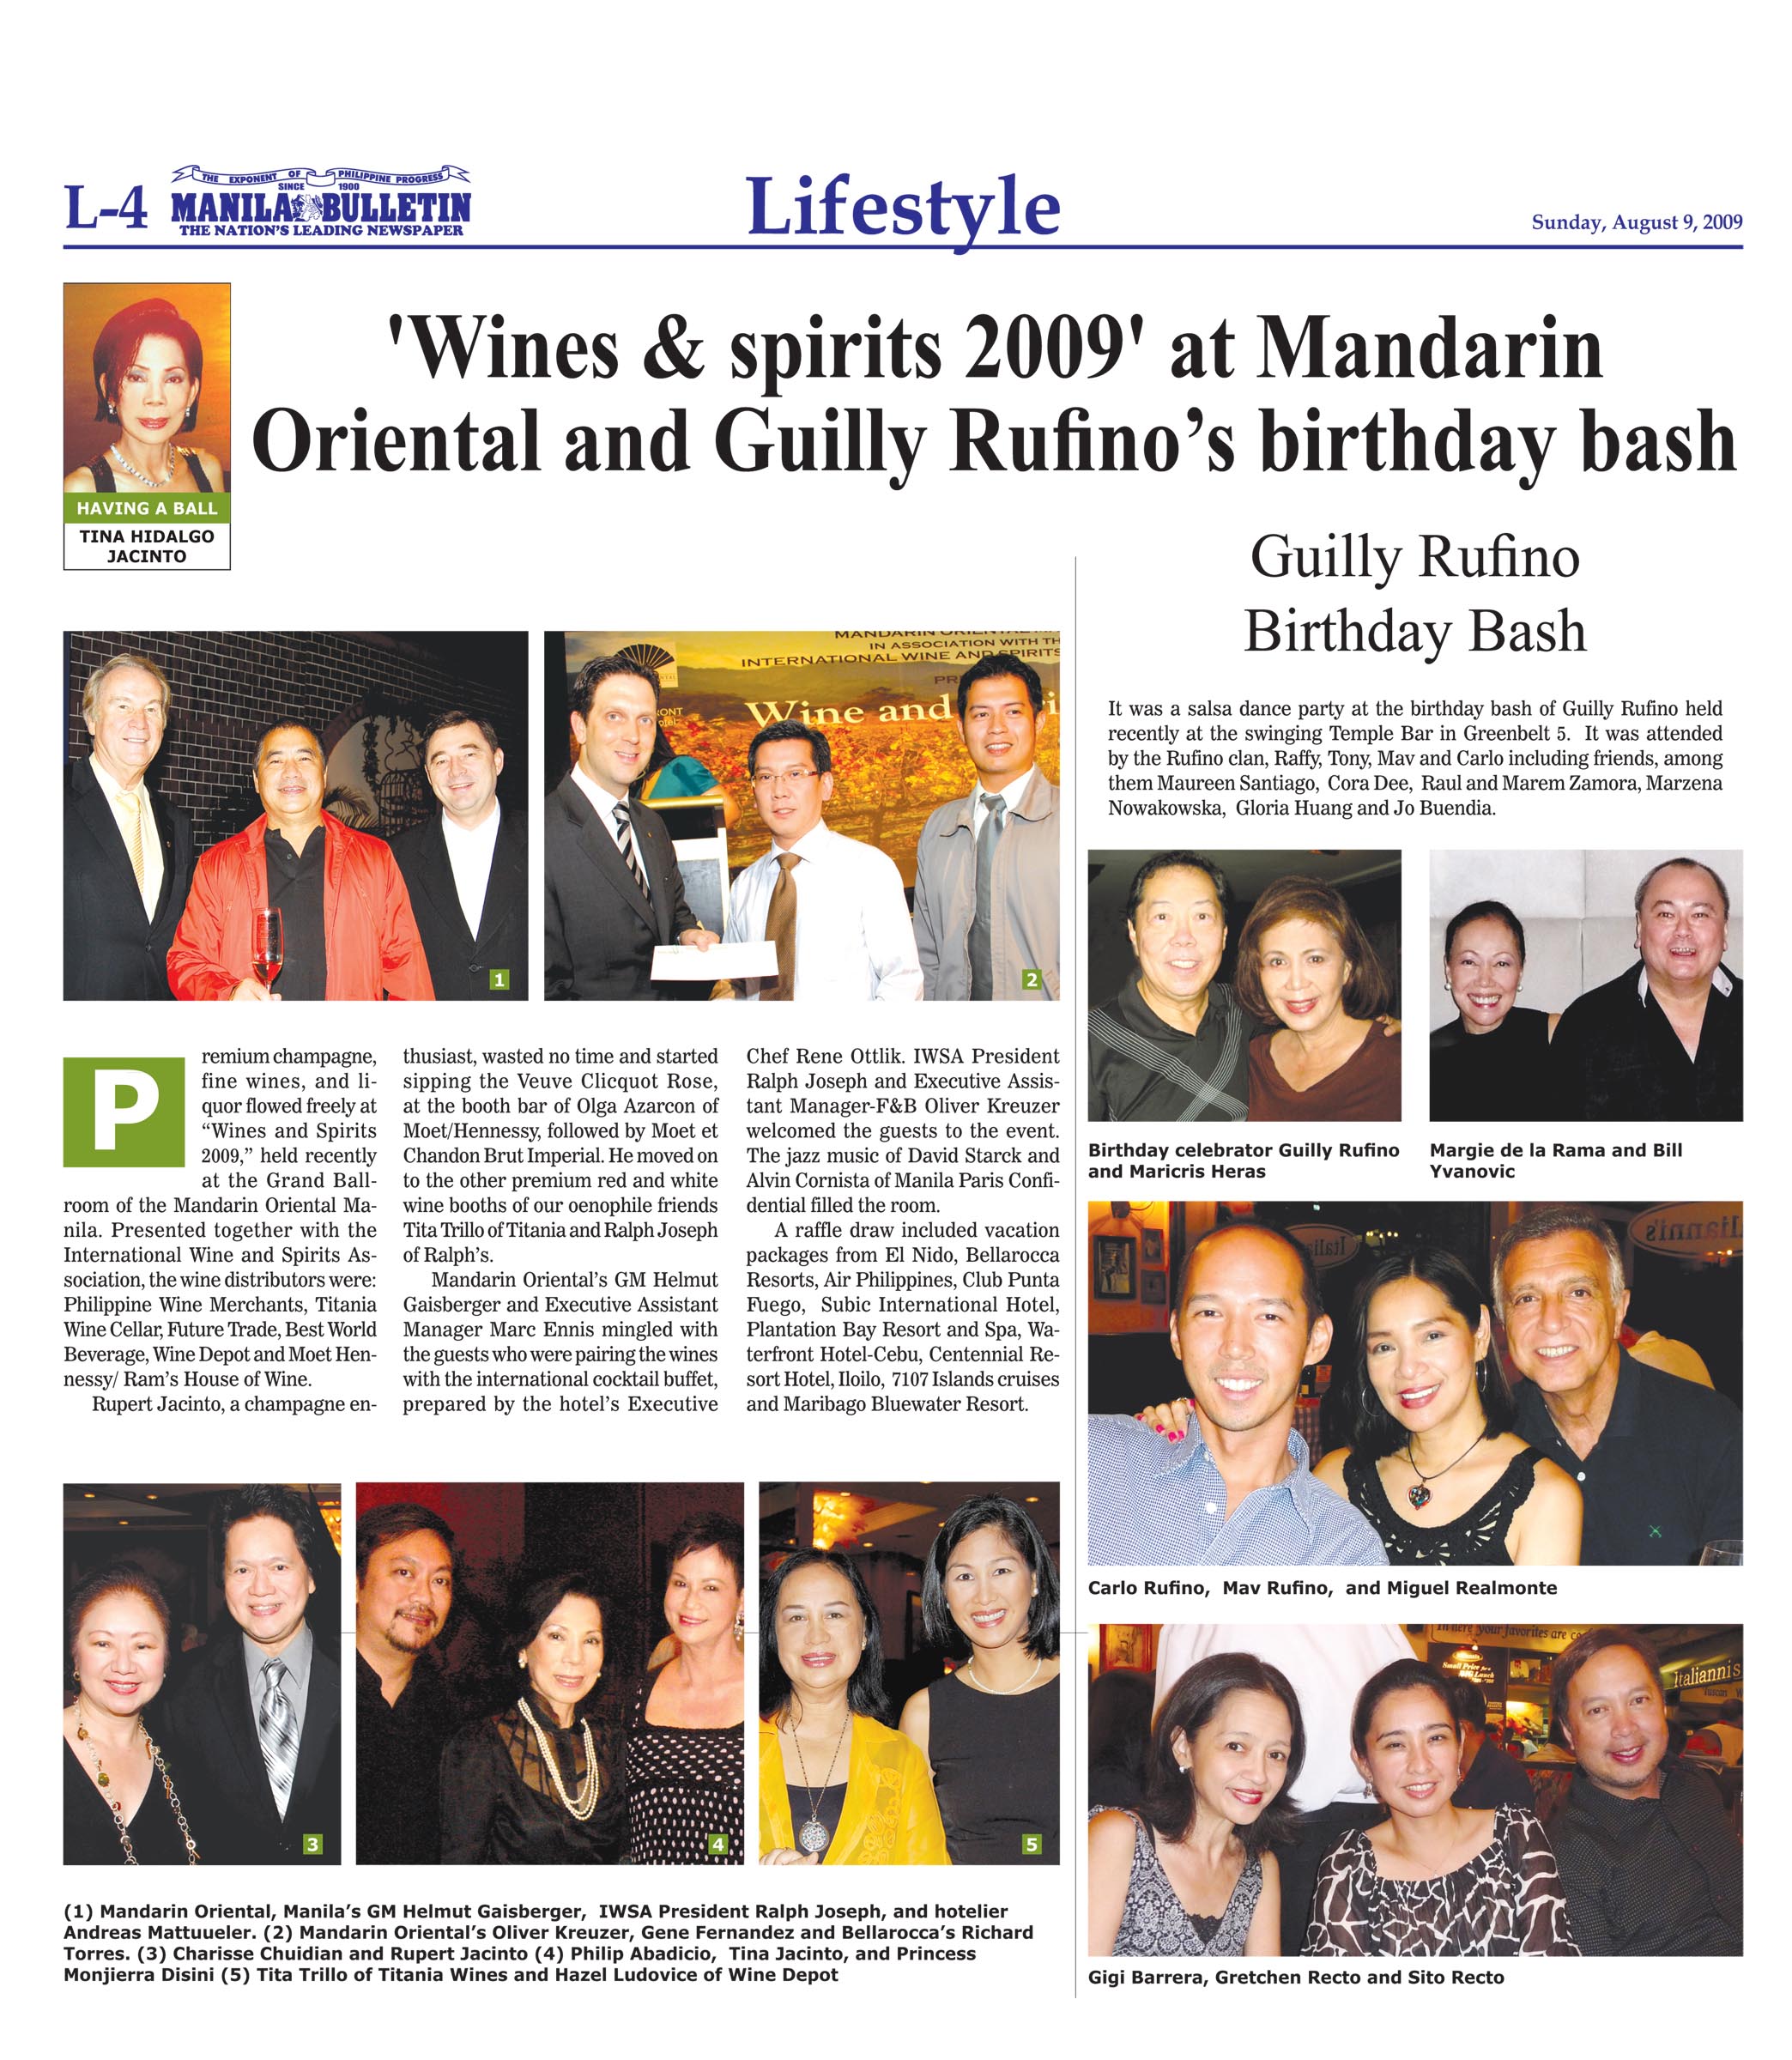 Wines & spirits 2009 at Mandarin Oriental and Guilly Rufino birthday Bash